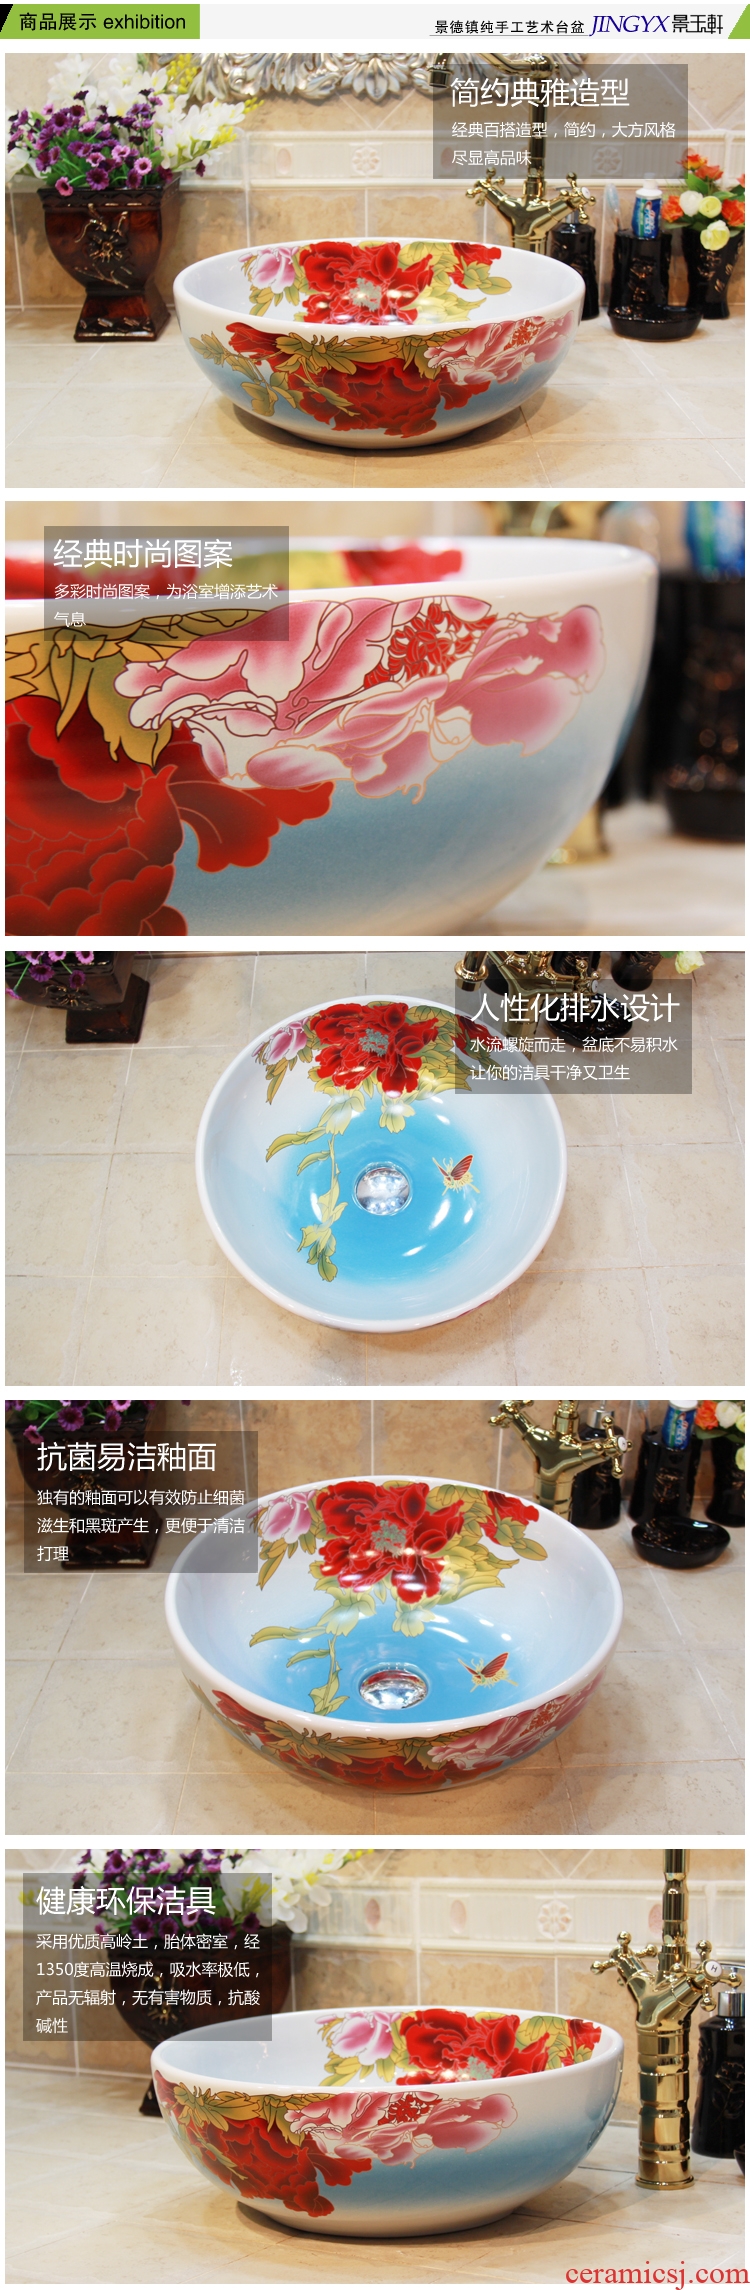 Jingdezhen ceramic basin cordate telosma art basin sinks the stage basin that wash a face